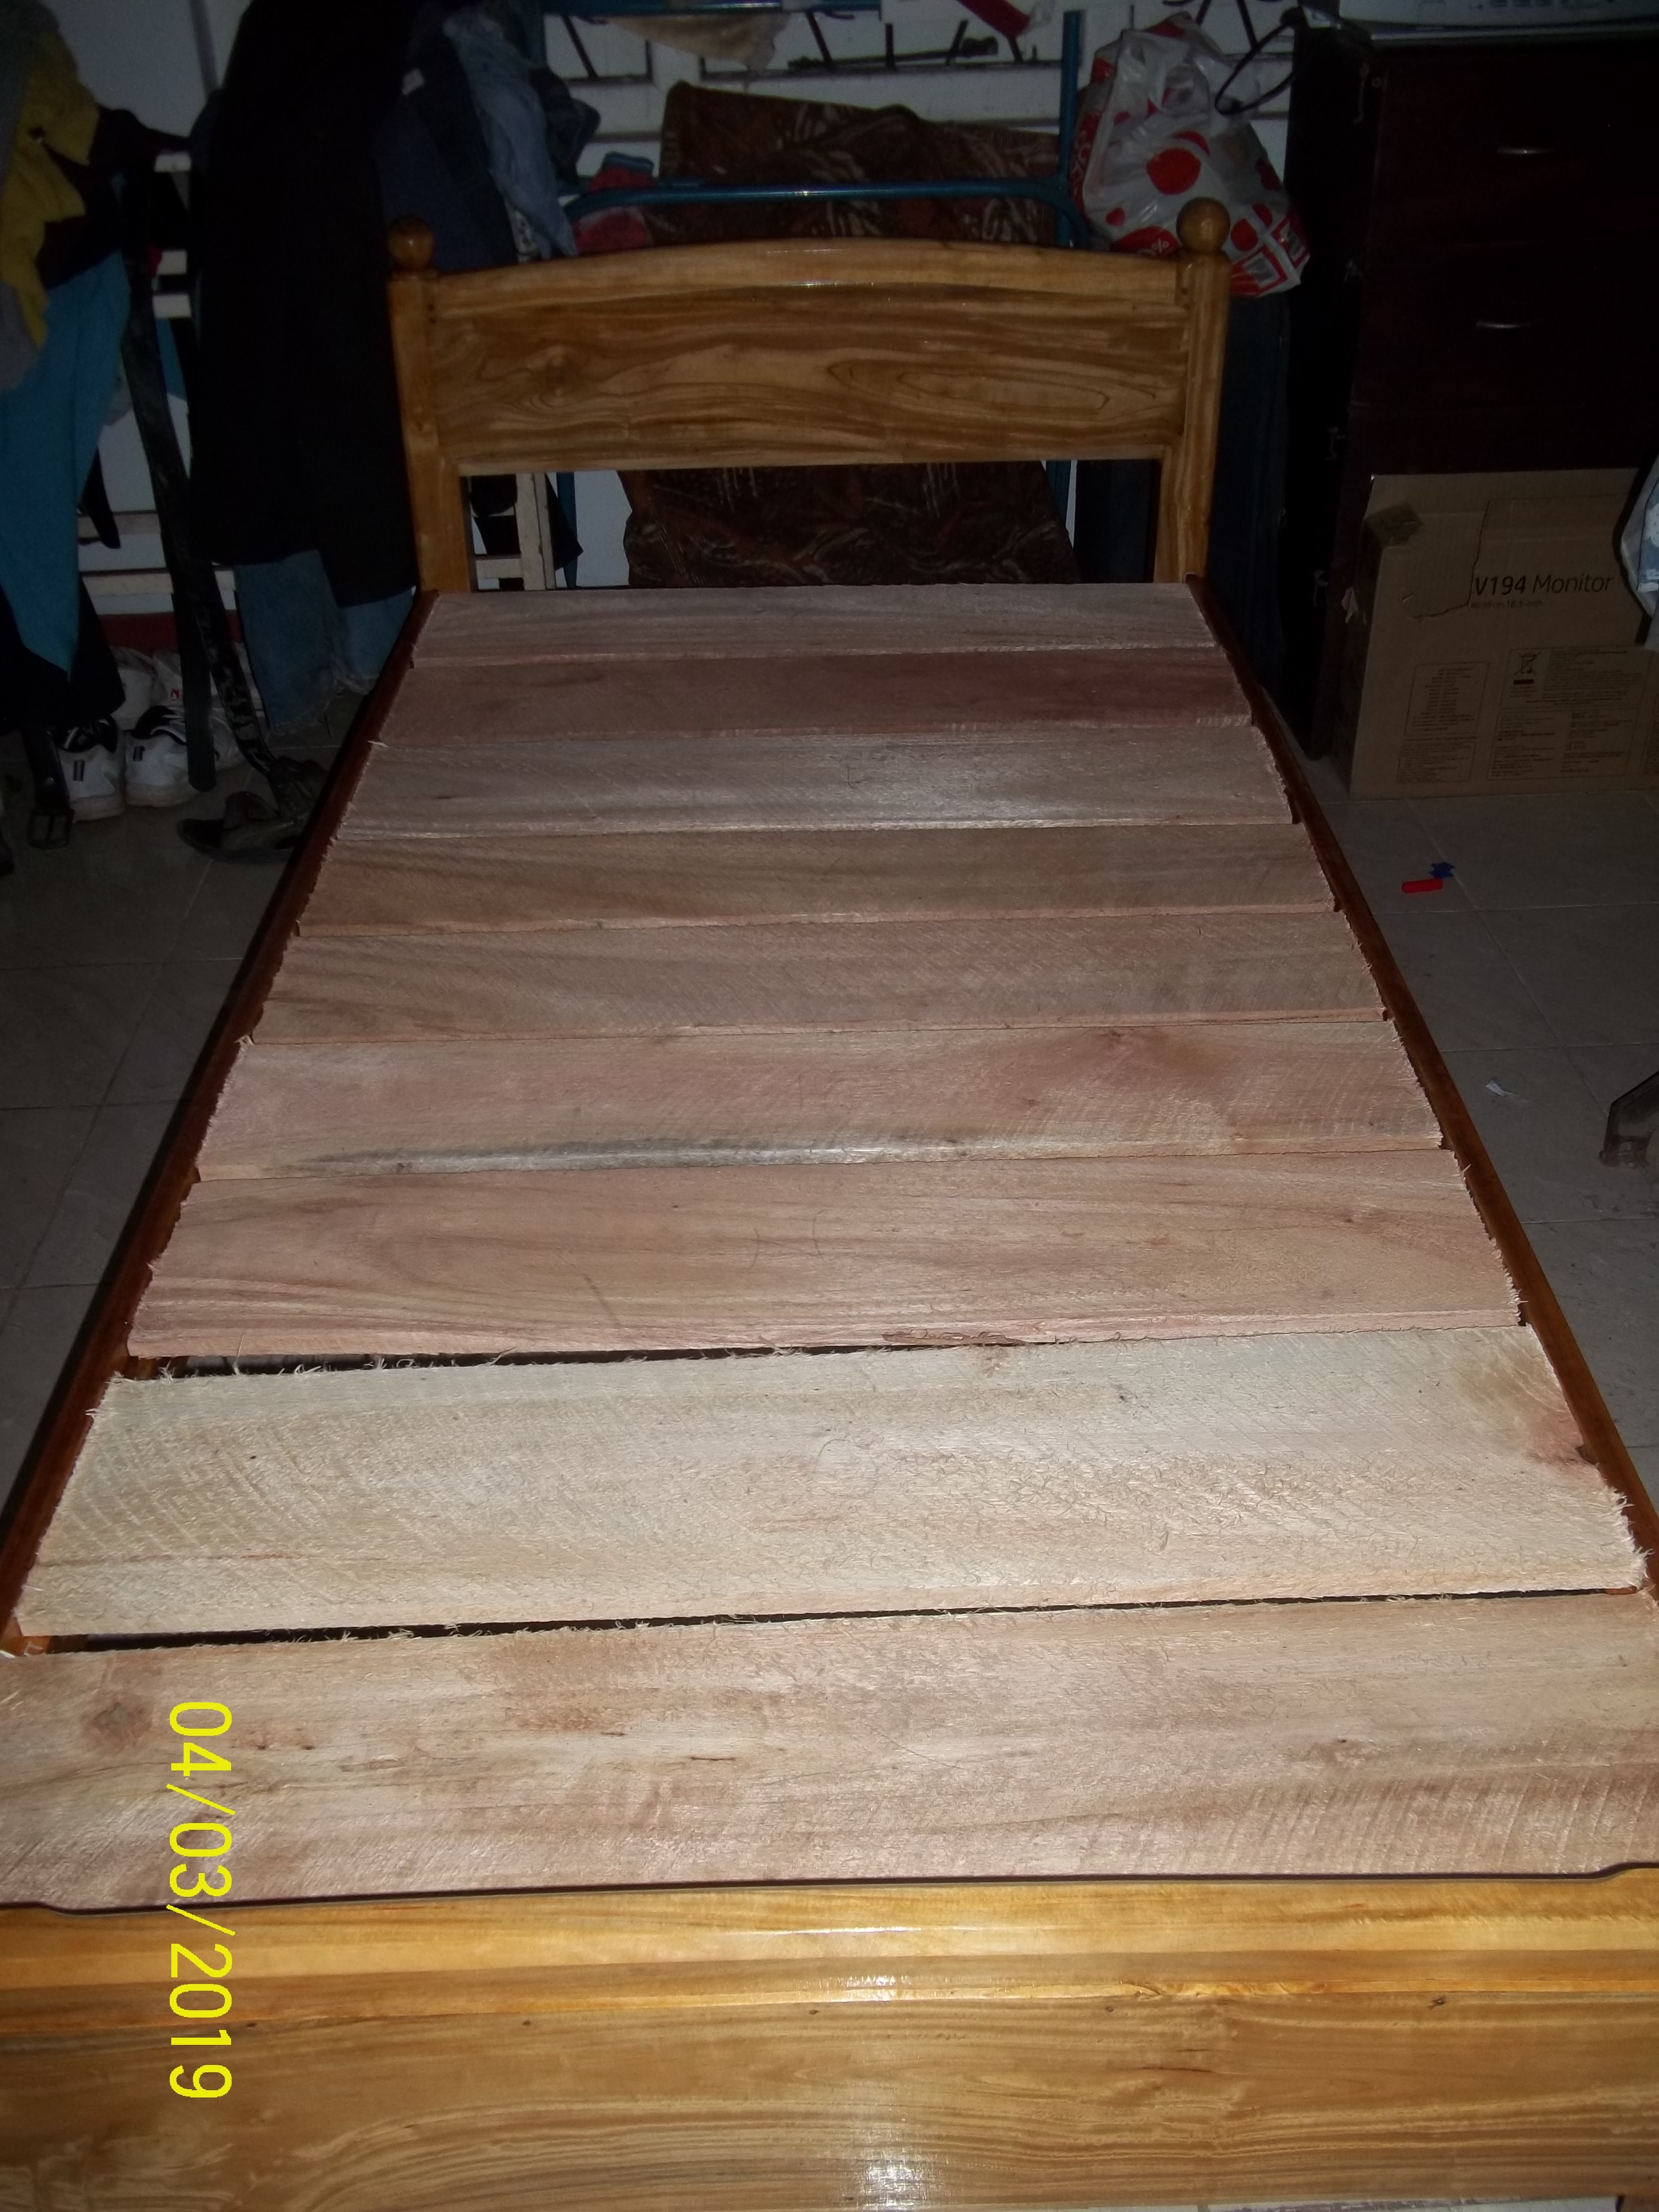 Burutha wood Medium Size (6ft by 5ft) bed 